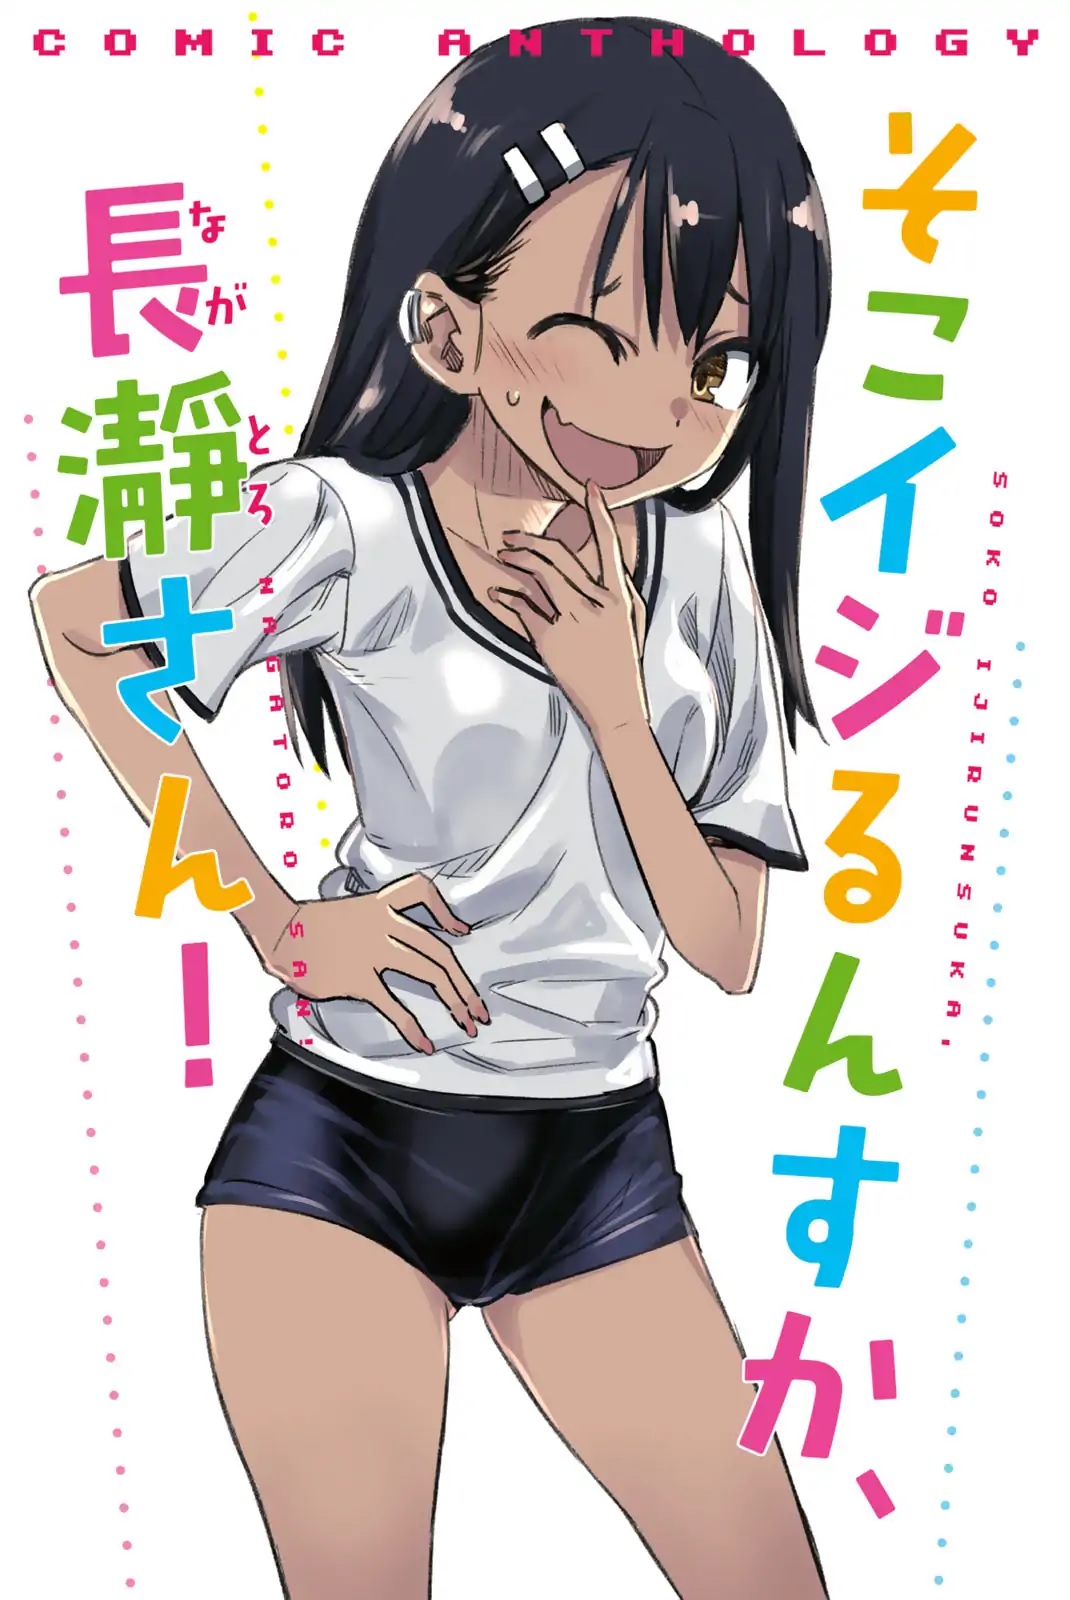 Dont Toy With Me Miss Nagatoro Manga Volume 11